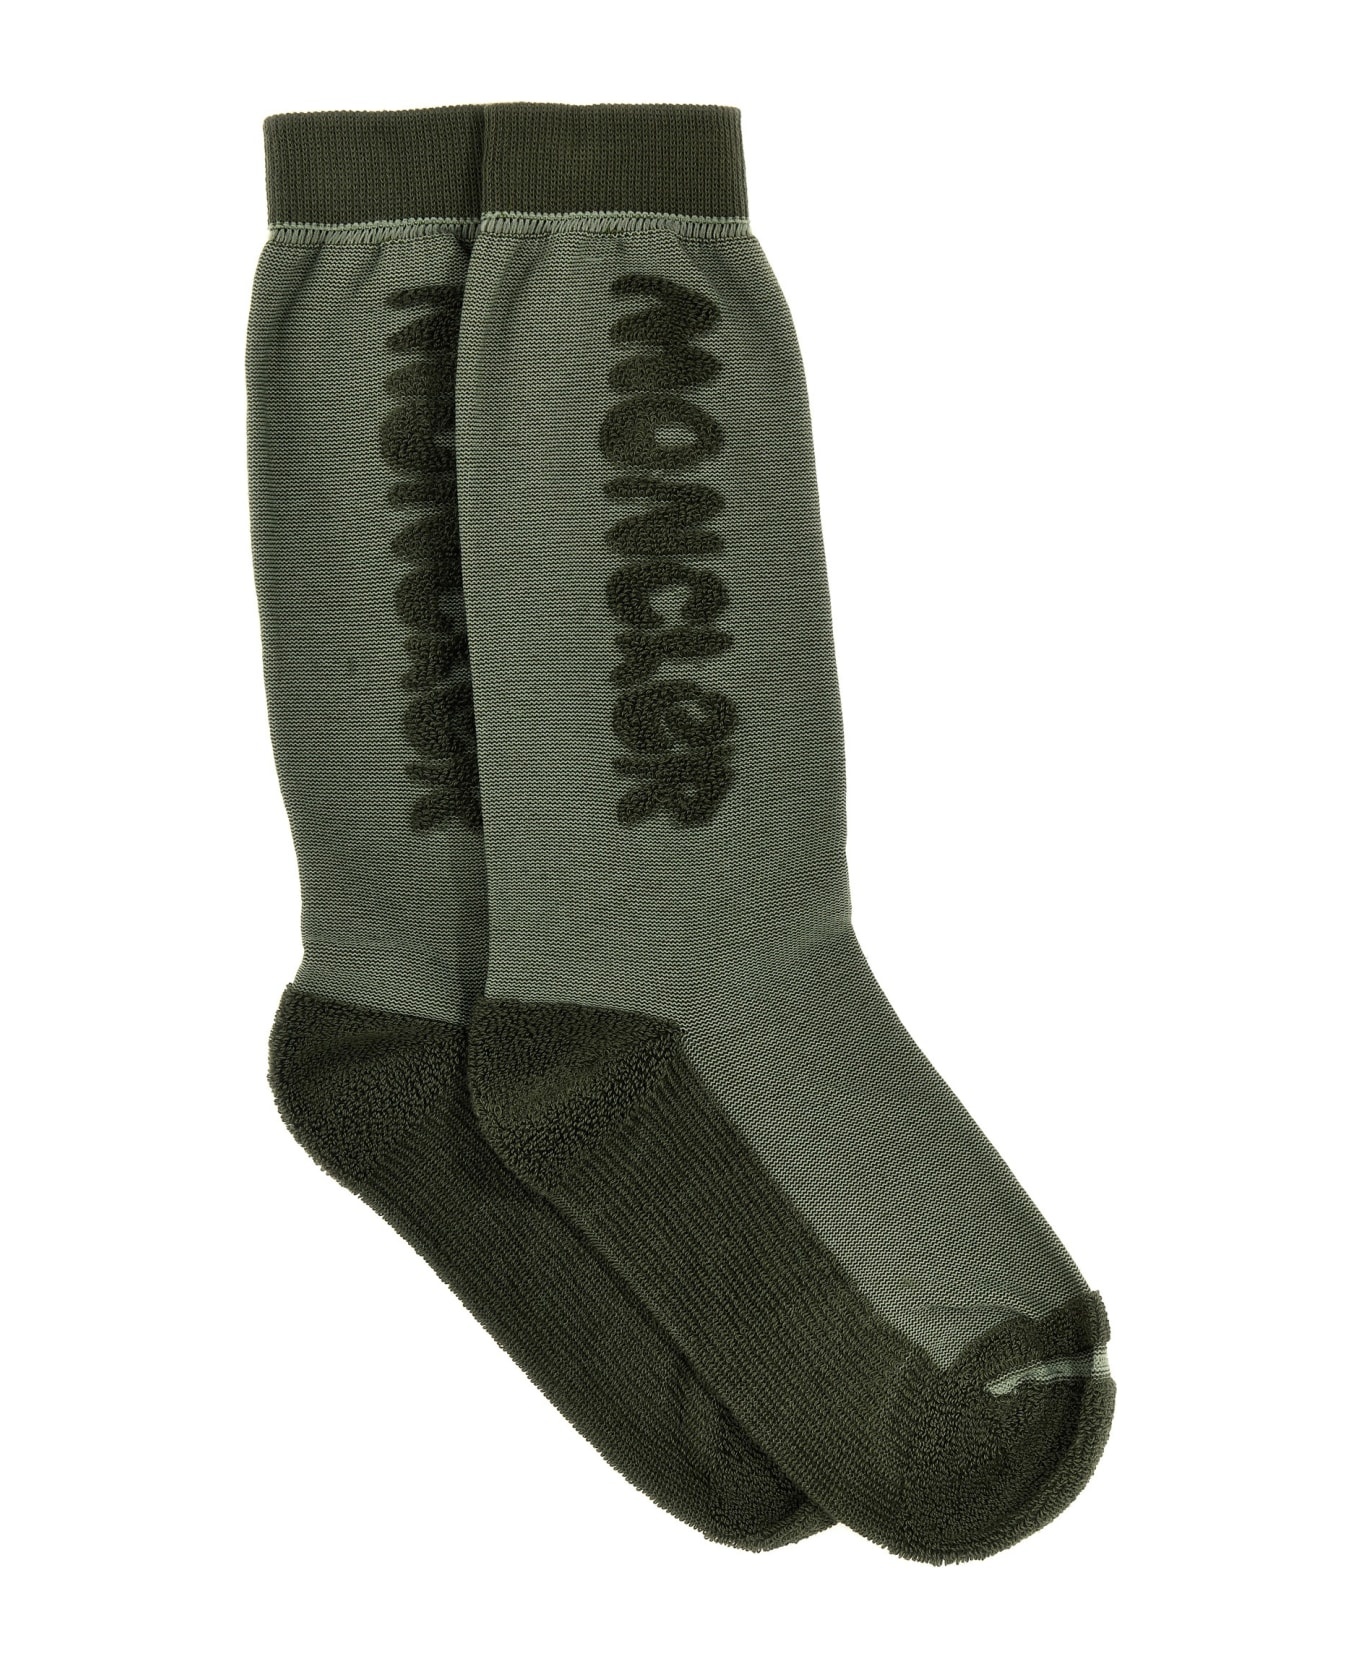 Moncler Genius X Salehe Bembury Socks - 1